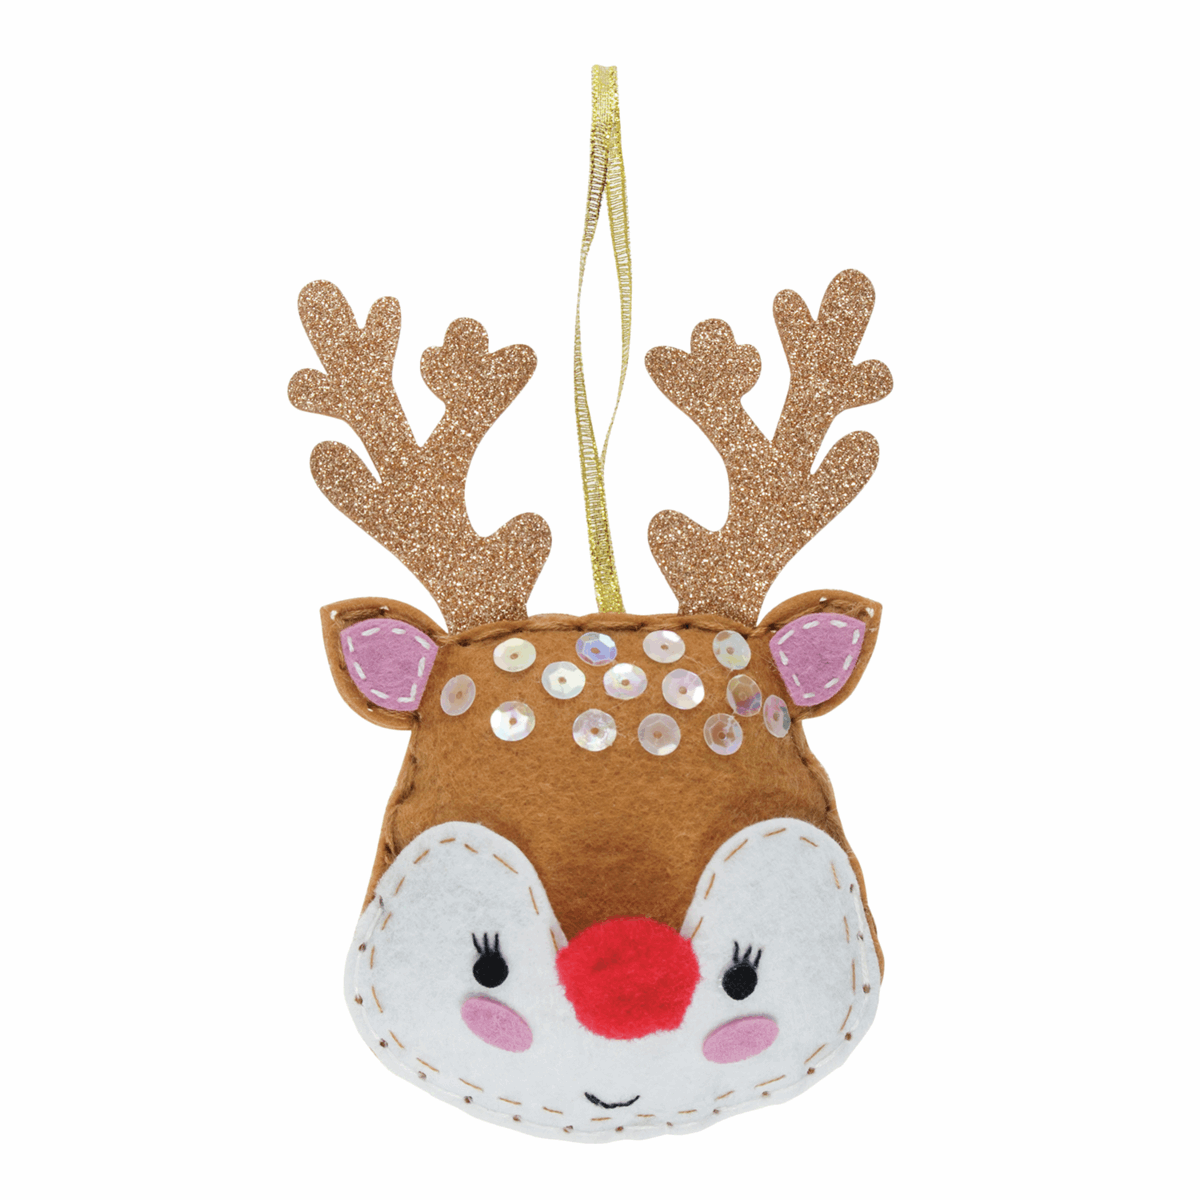 Trimits Felt Decoration Kit - Christmas Reindeer